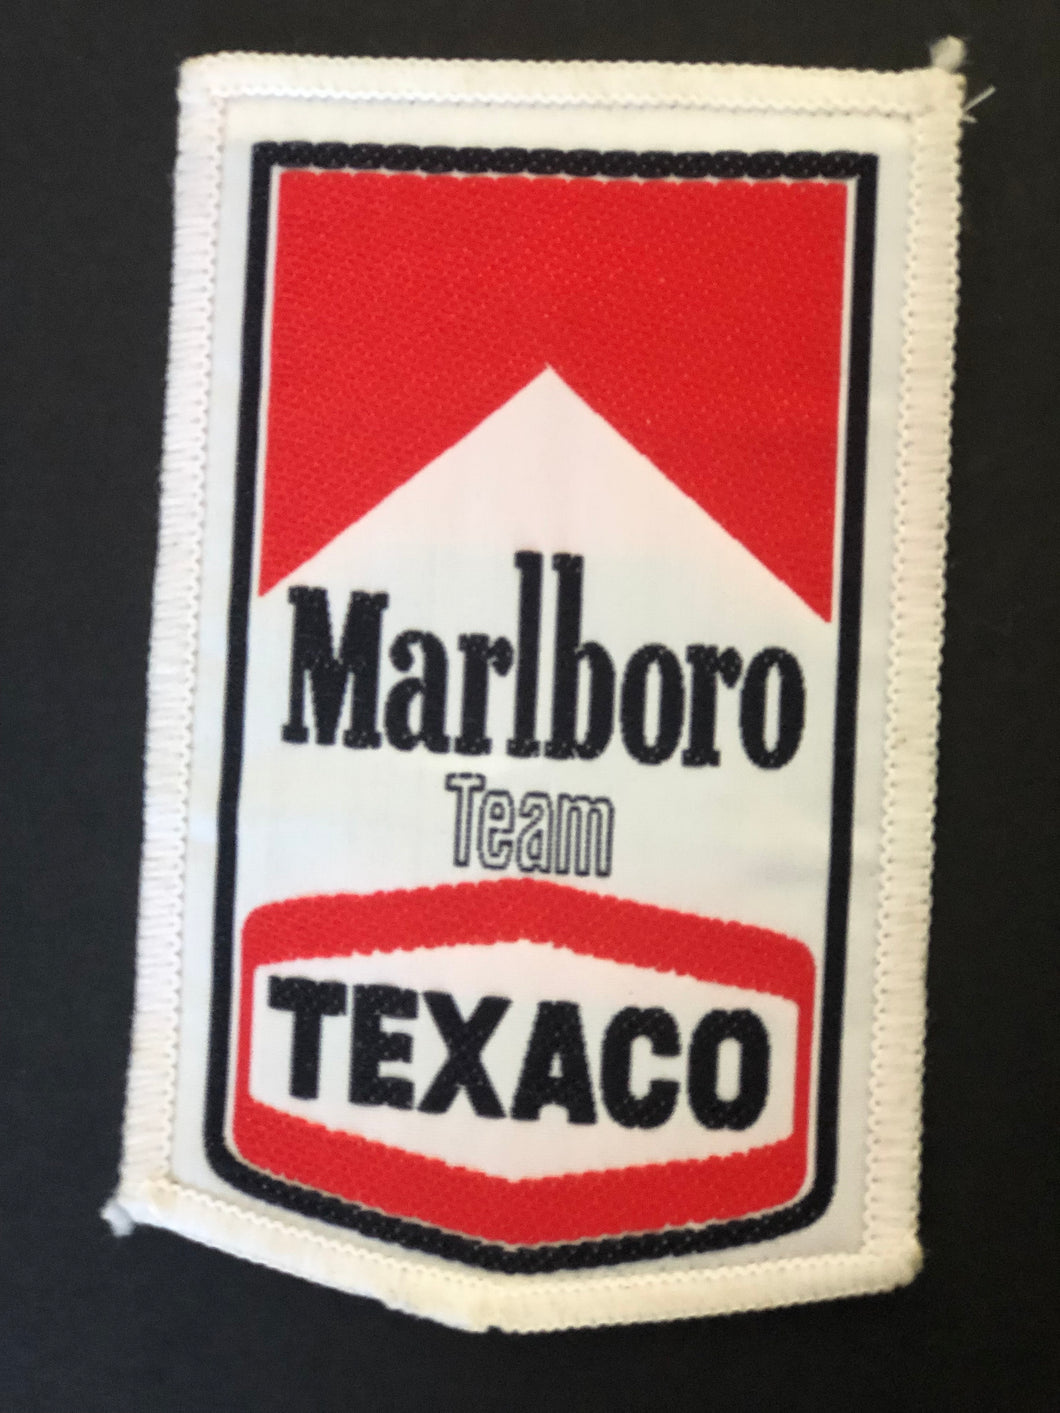 Marlboro team Texaco - Team Shield Cloth Badge